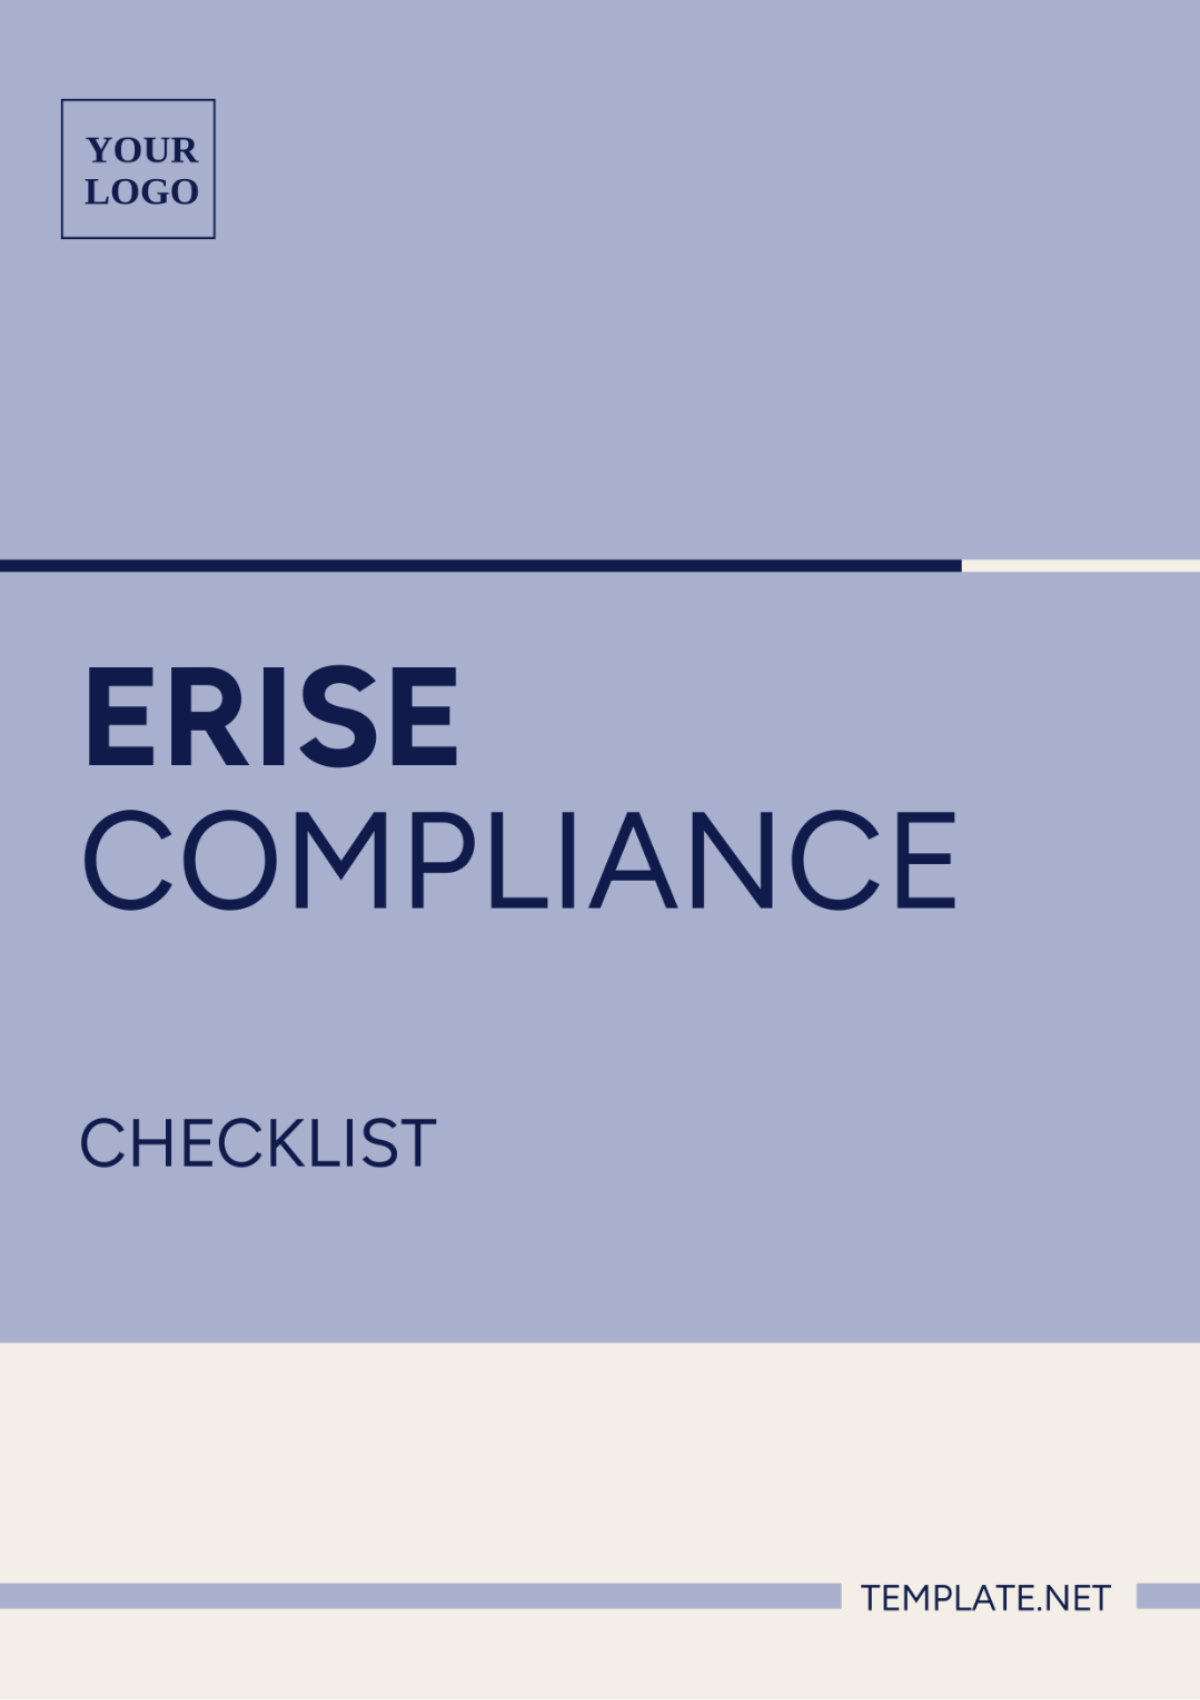 ERISA Compliance Checklist Template